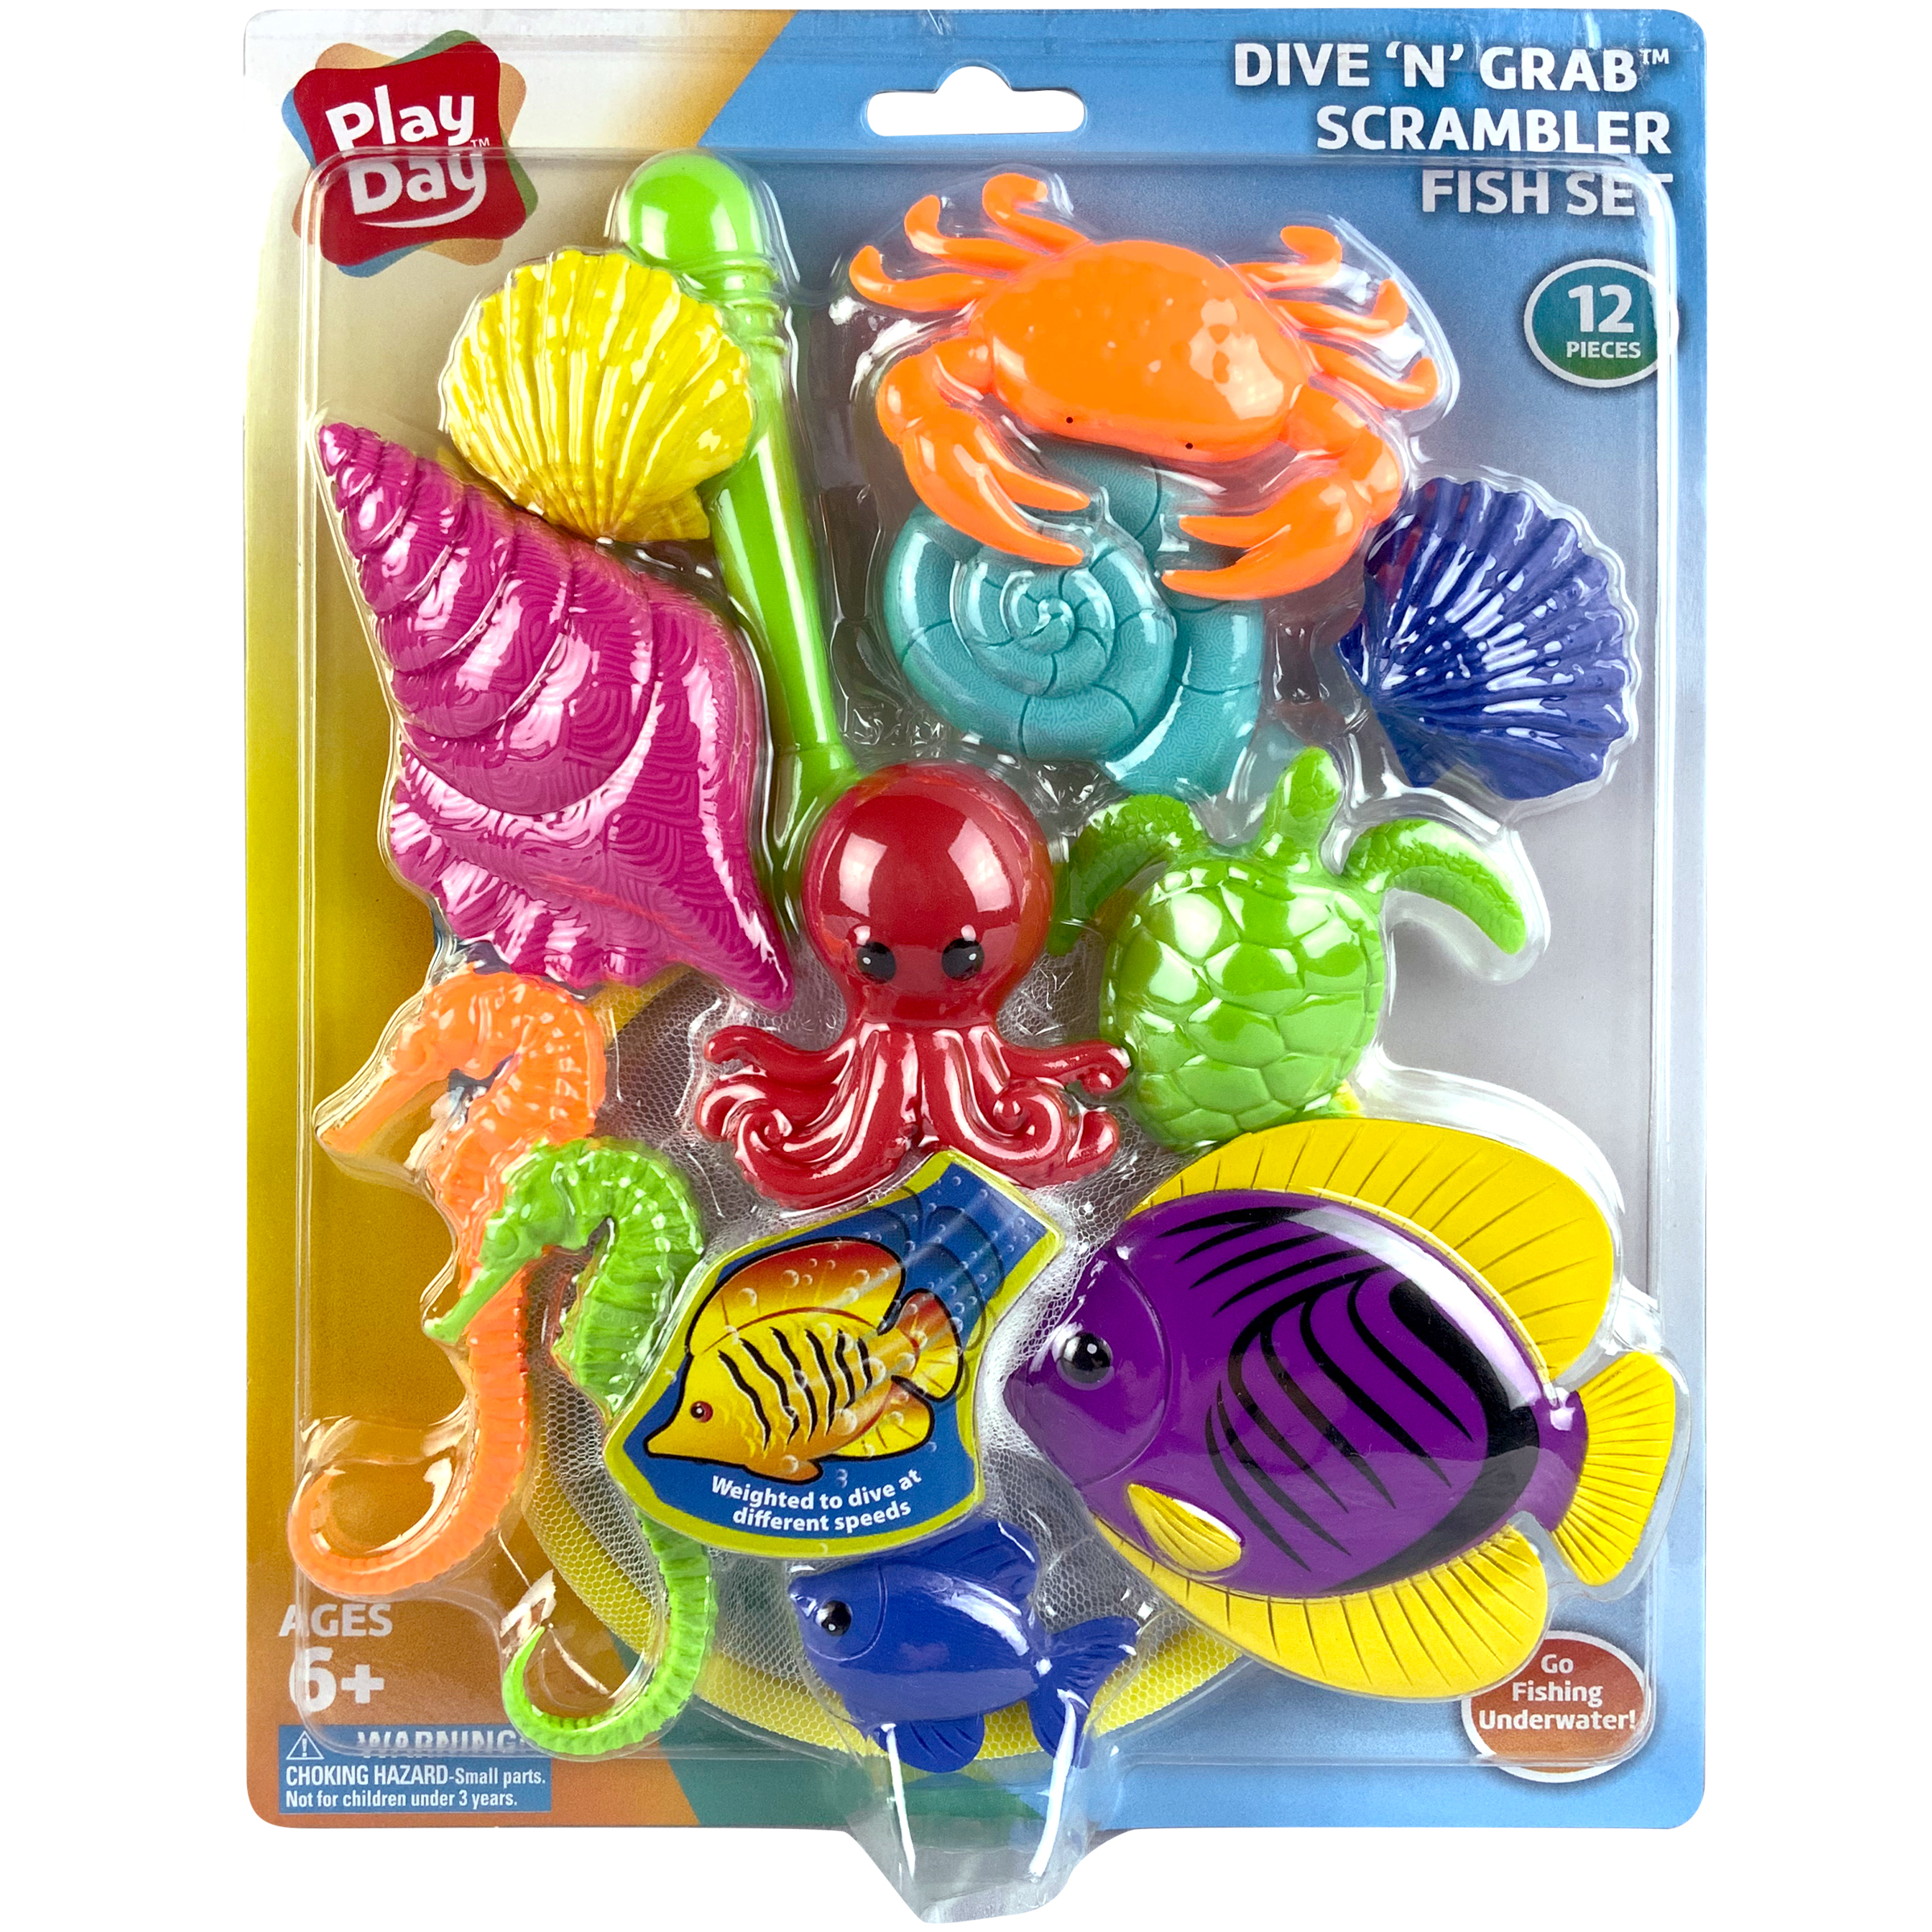 Play Day Dive 'N Grab Scrambler Fish Set, 12 Piece Pool Toy - image 3 of 4